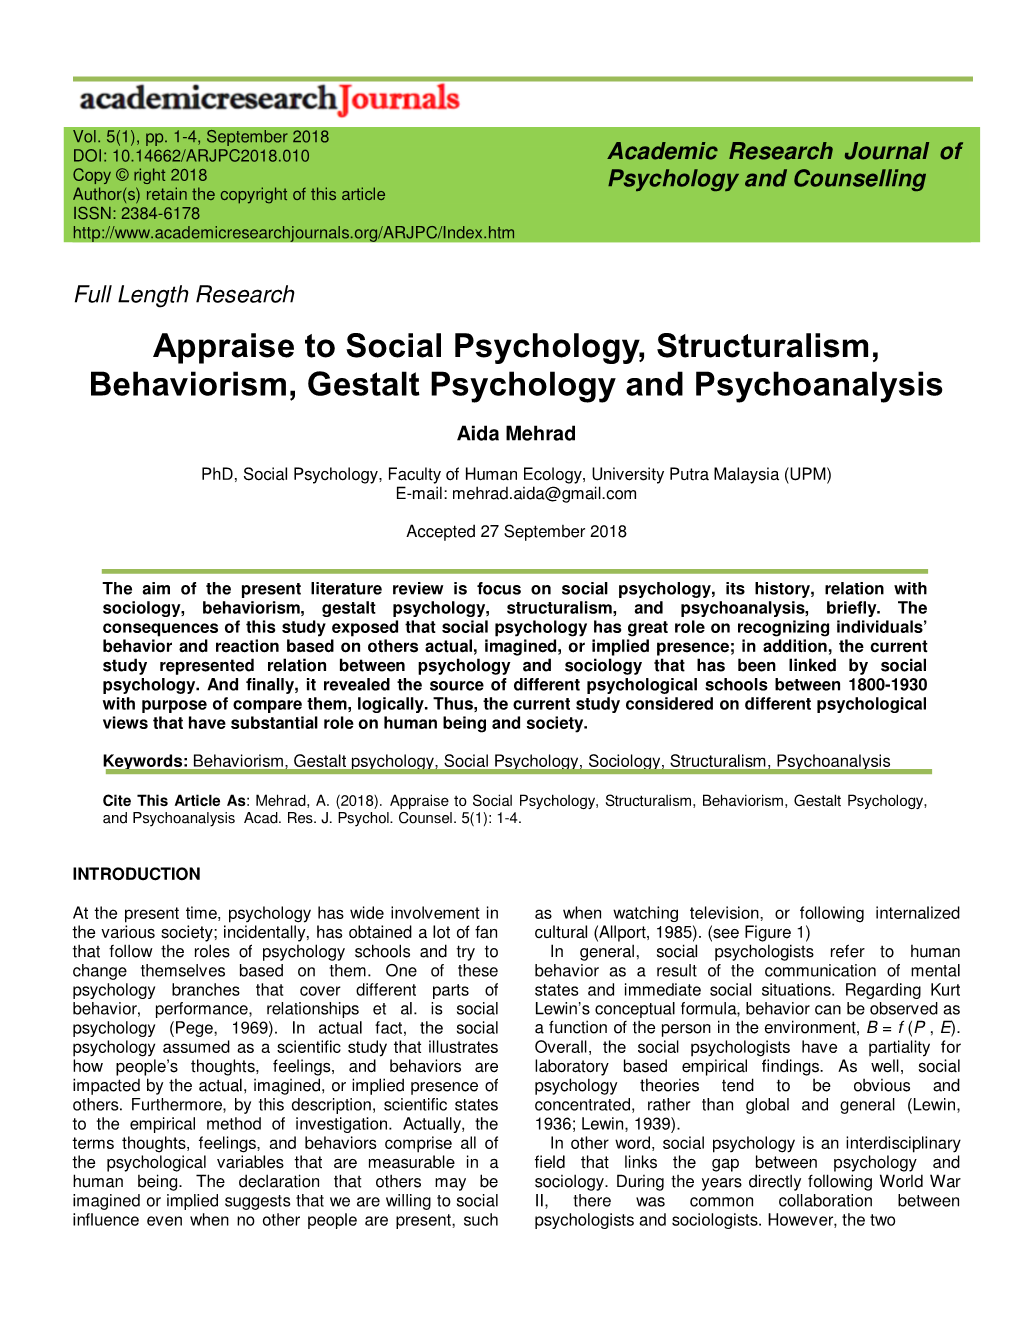 Appraise to Social Psychology, Structuralism, Behaviorism, Gestalt Psychology and Psychoanalysis